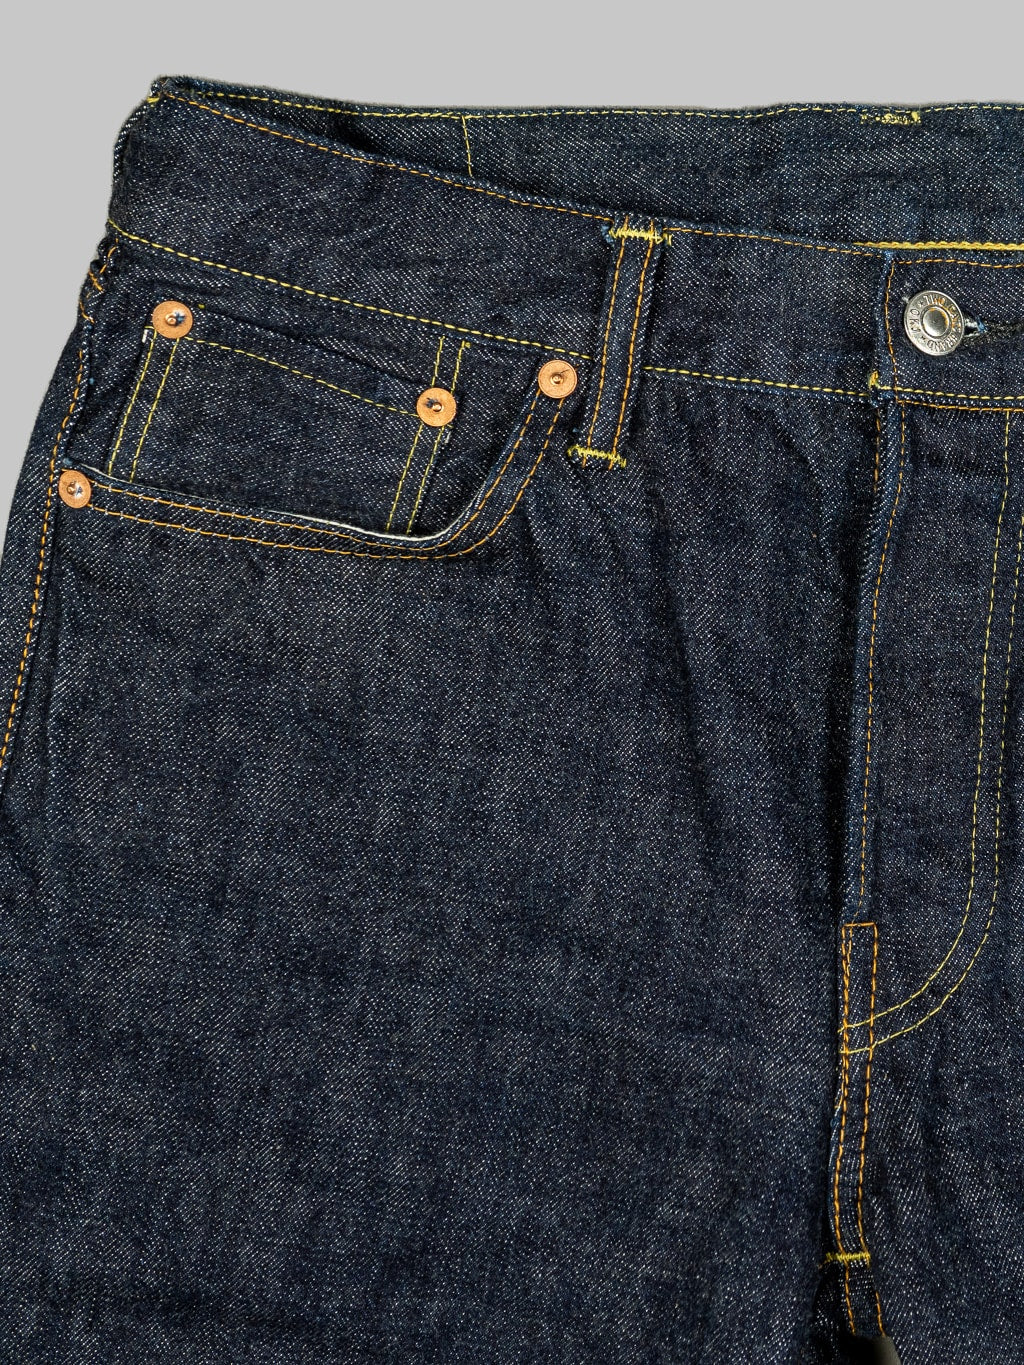 tcb jeans slim 50s selvedge japanese denim front pocket detail